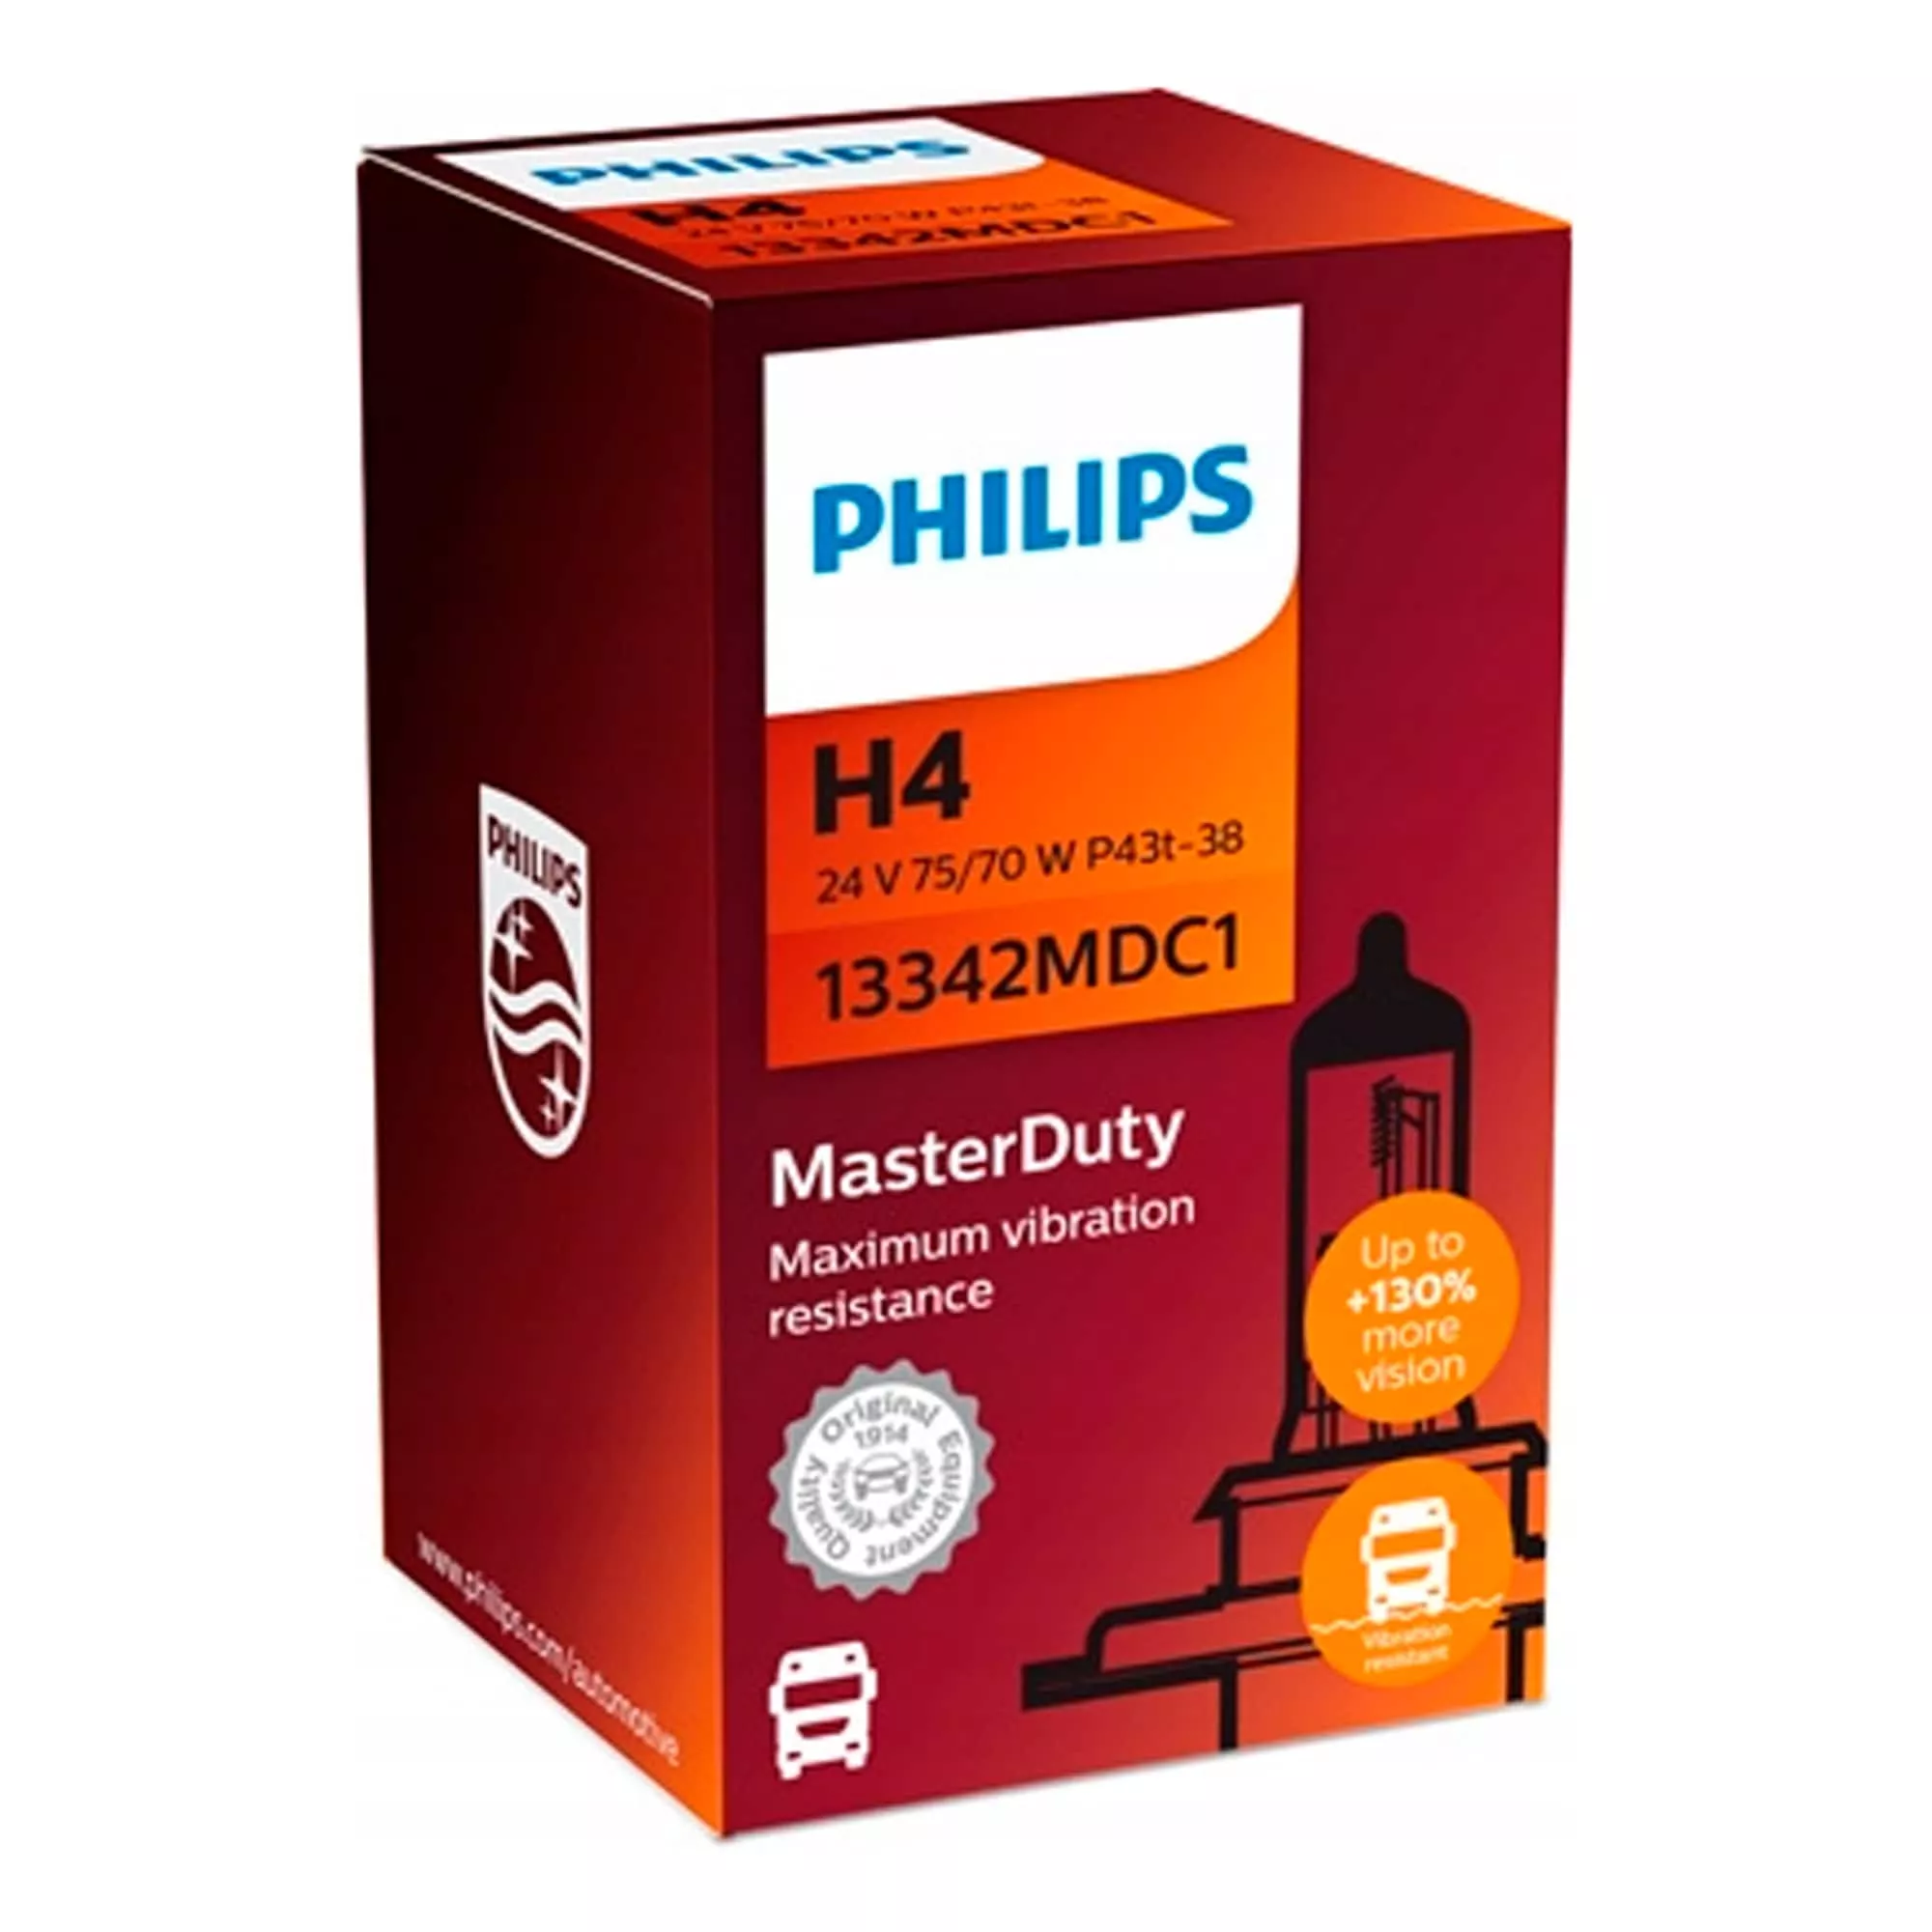 Лампа Philips  Master Duty H4 24V 70/75W 13342 MD C1